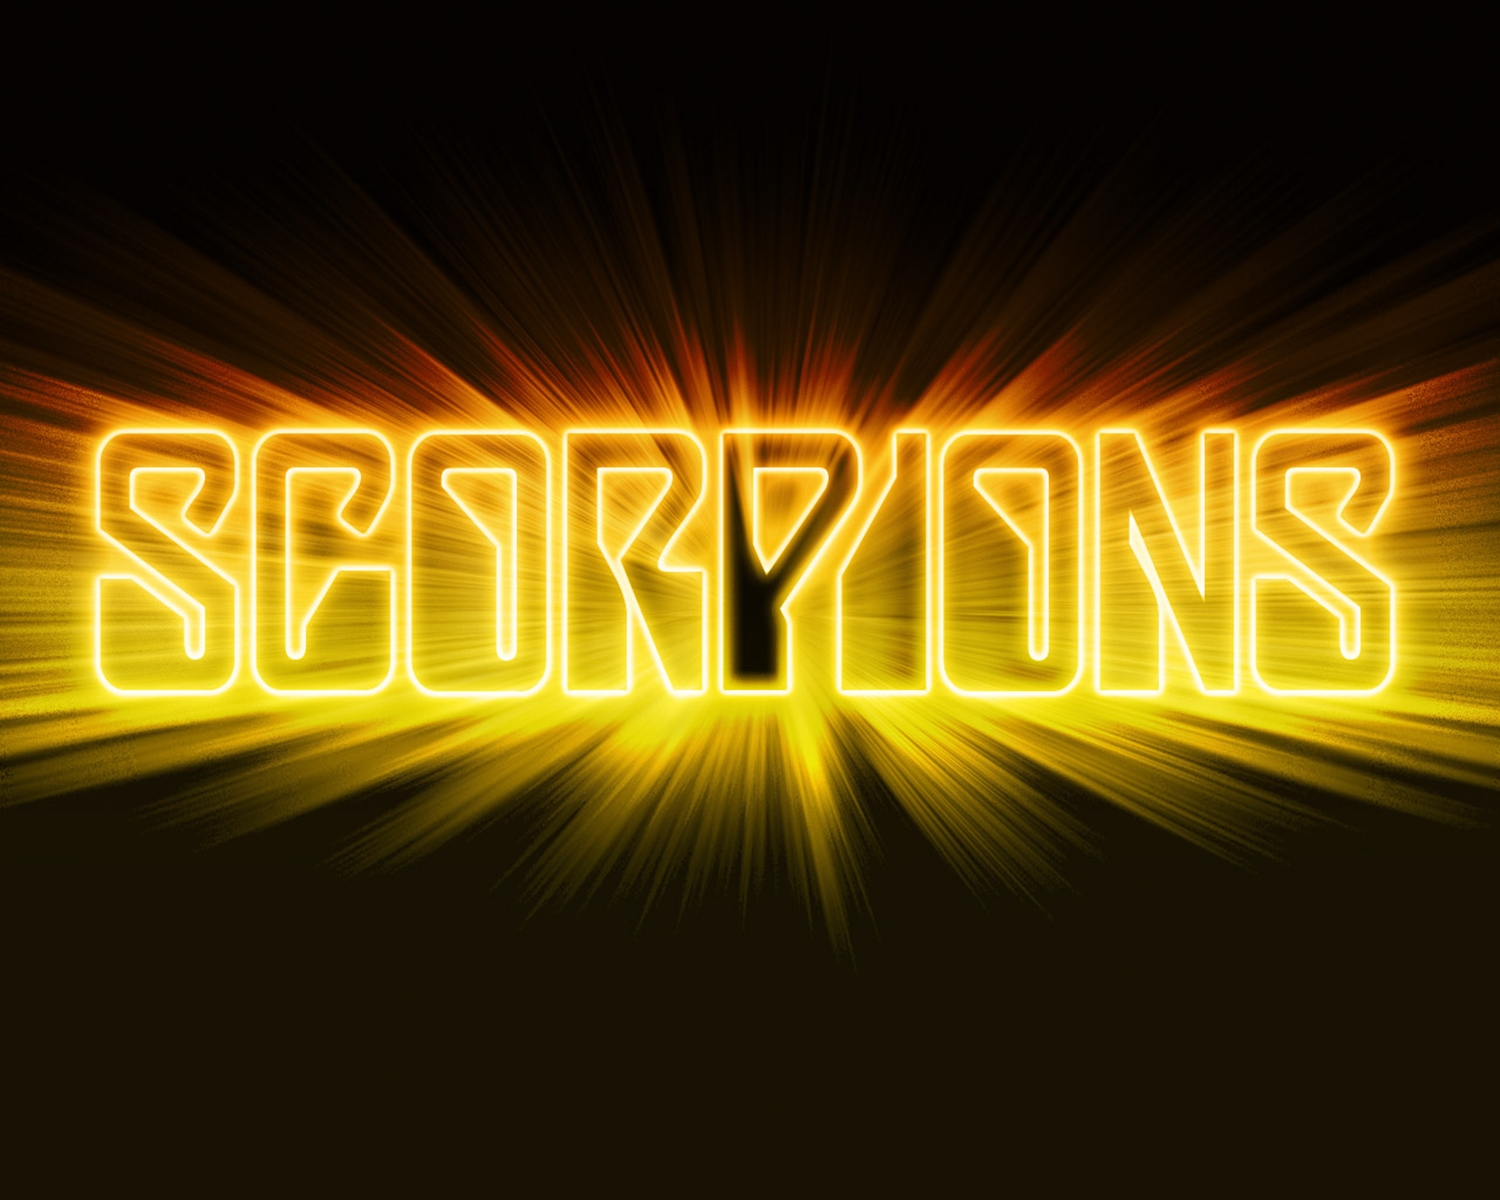 Scorpions logo Wallpaper Background 34461